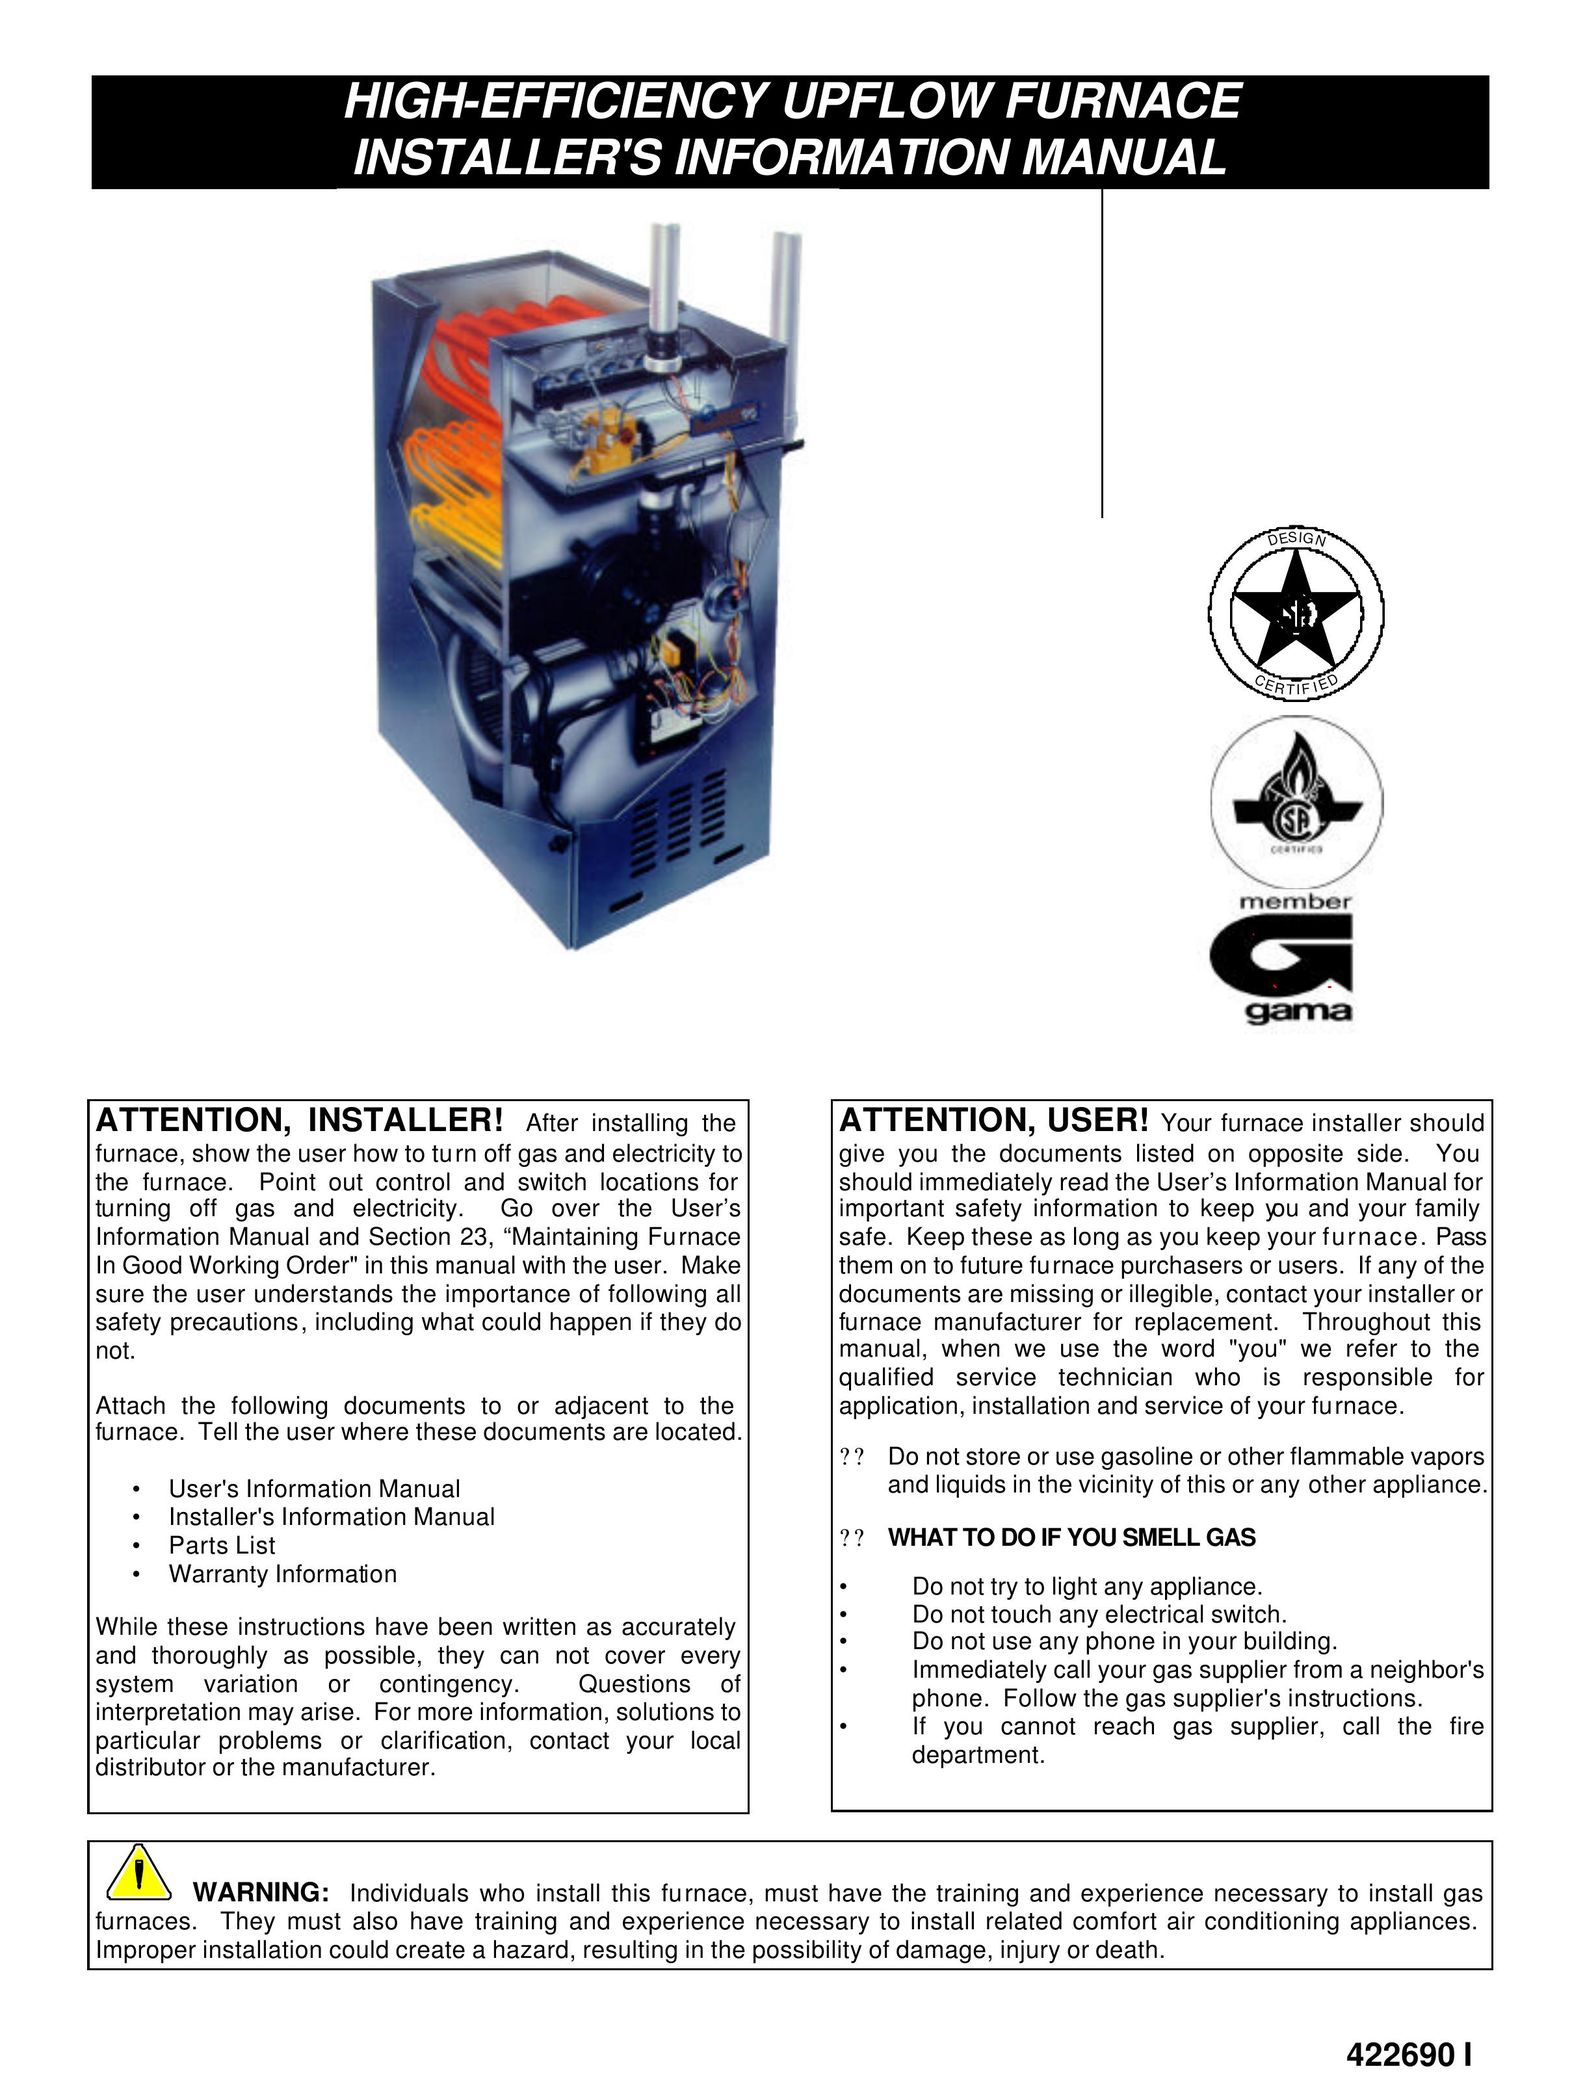 HP (Hewlett-Packard) 422690 I Furnace User Manual